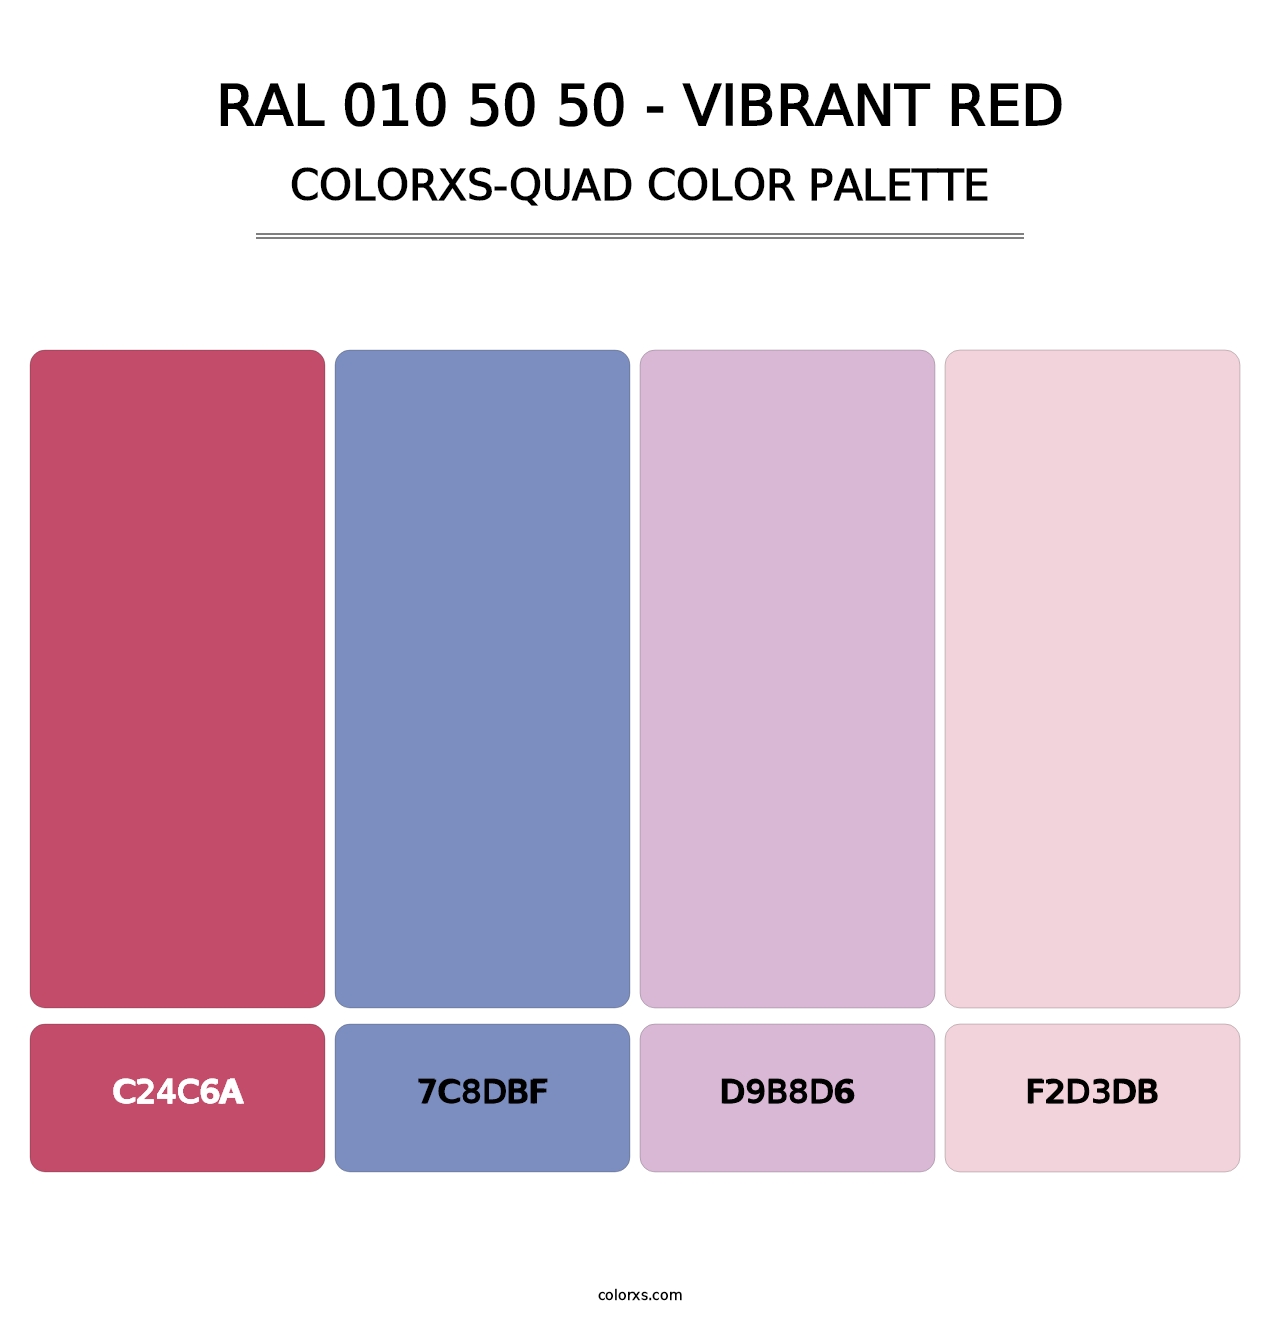 RAL 010 50 50 - Vibrant Red - Colorxs Quad Palette